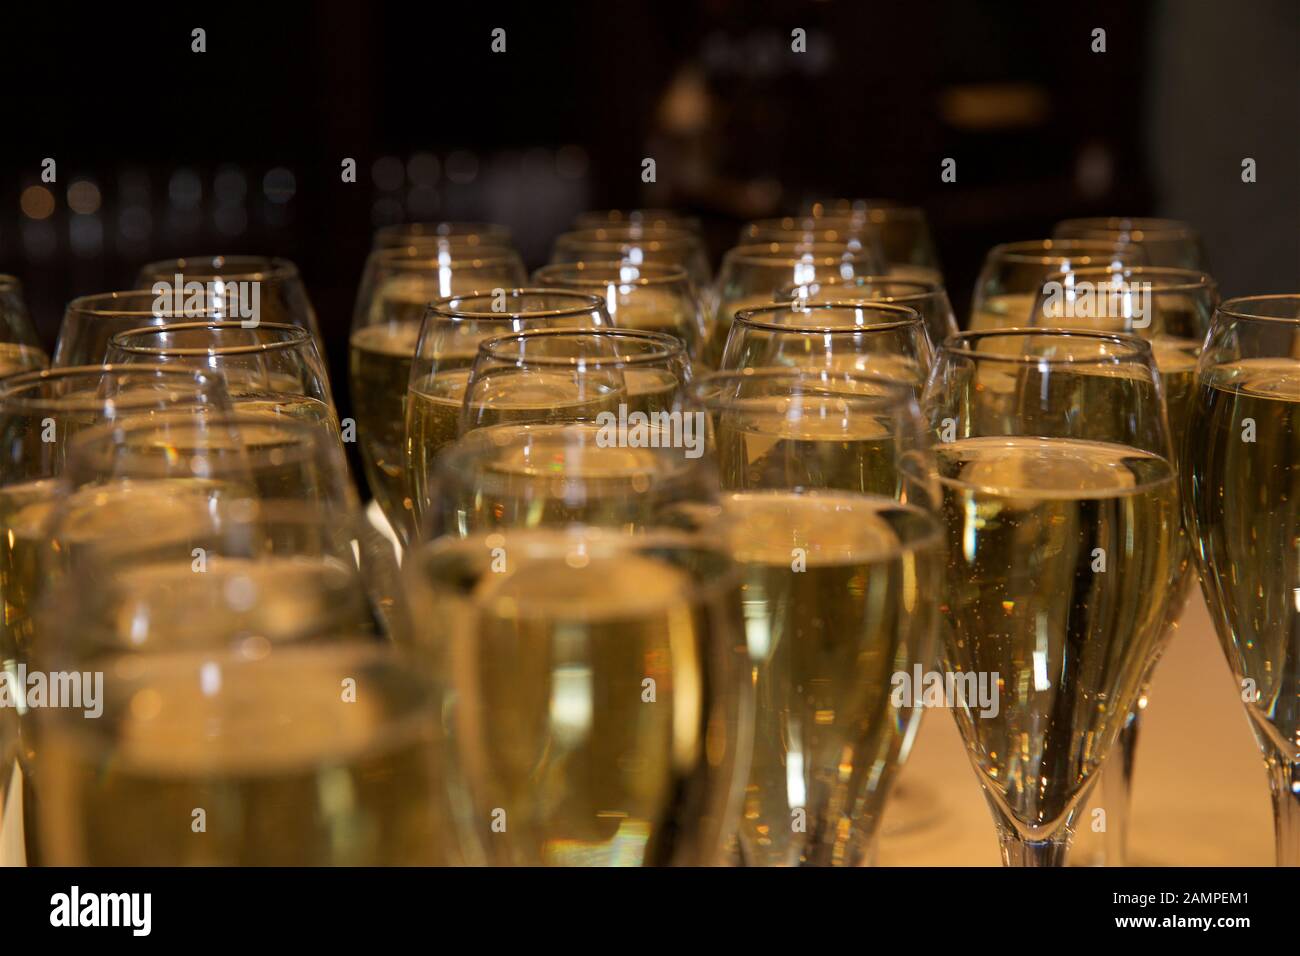 Glasses of champagne. Stock Photo